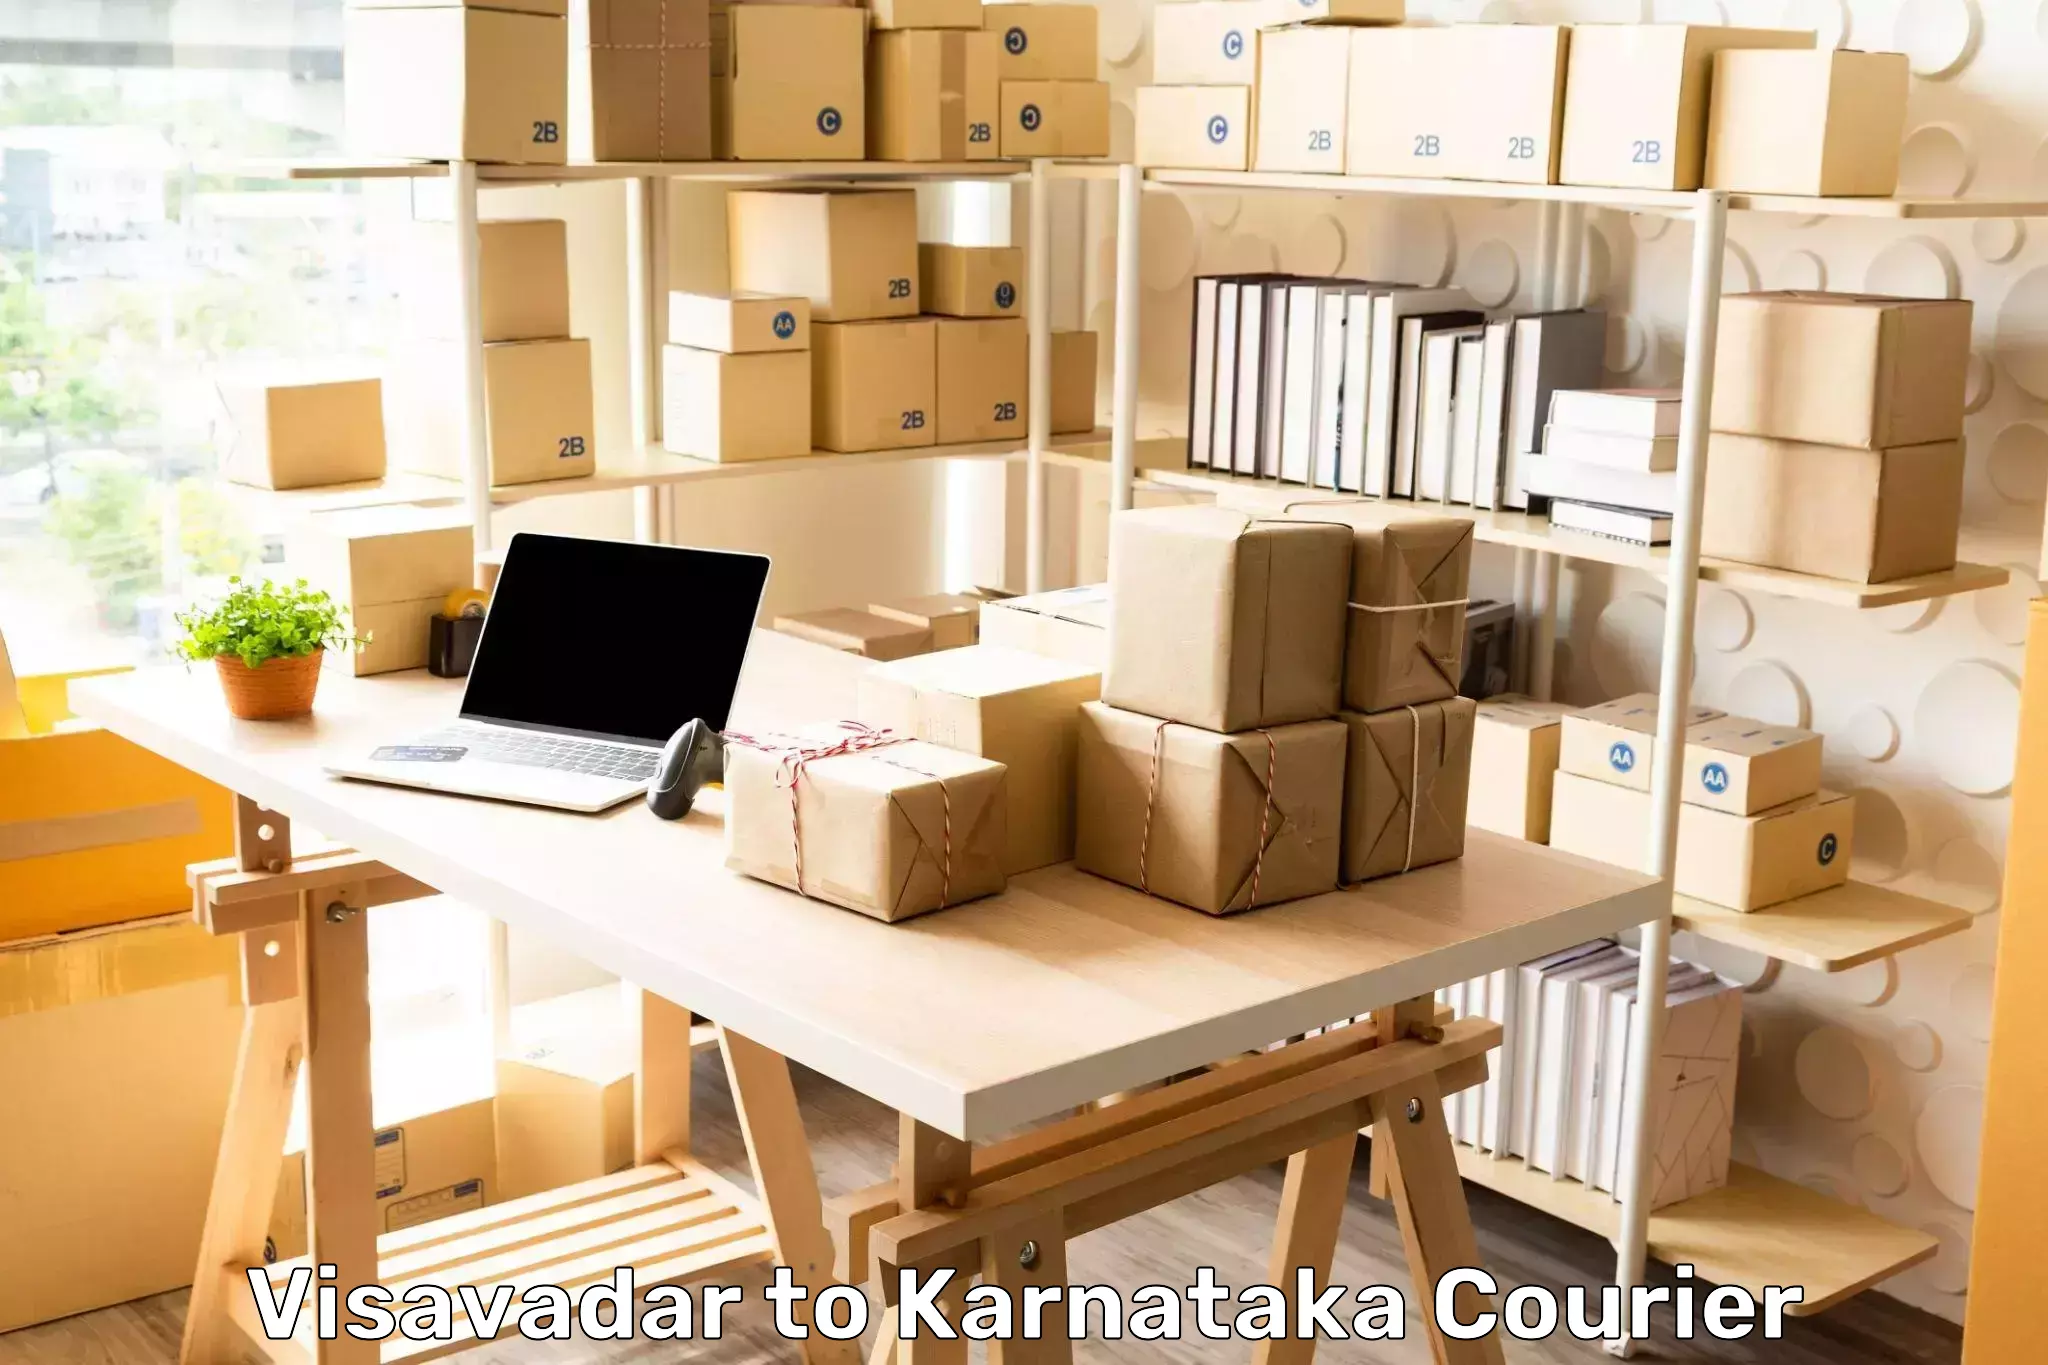 State-of-the-art courier technology Visavadar to Karnataka